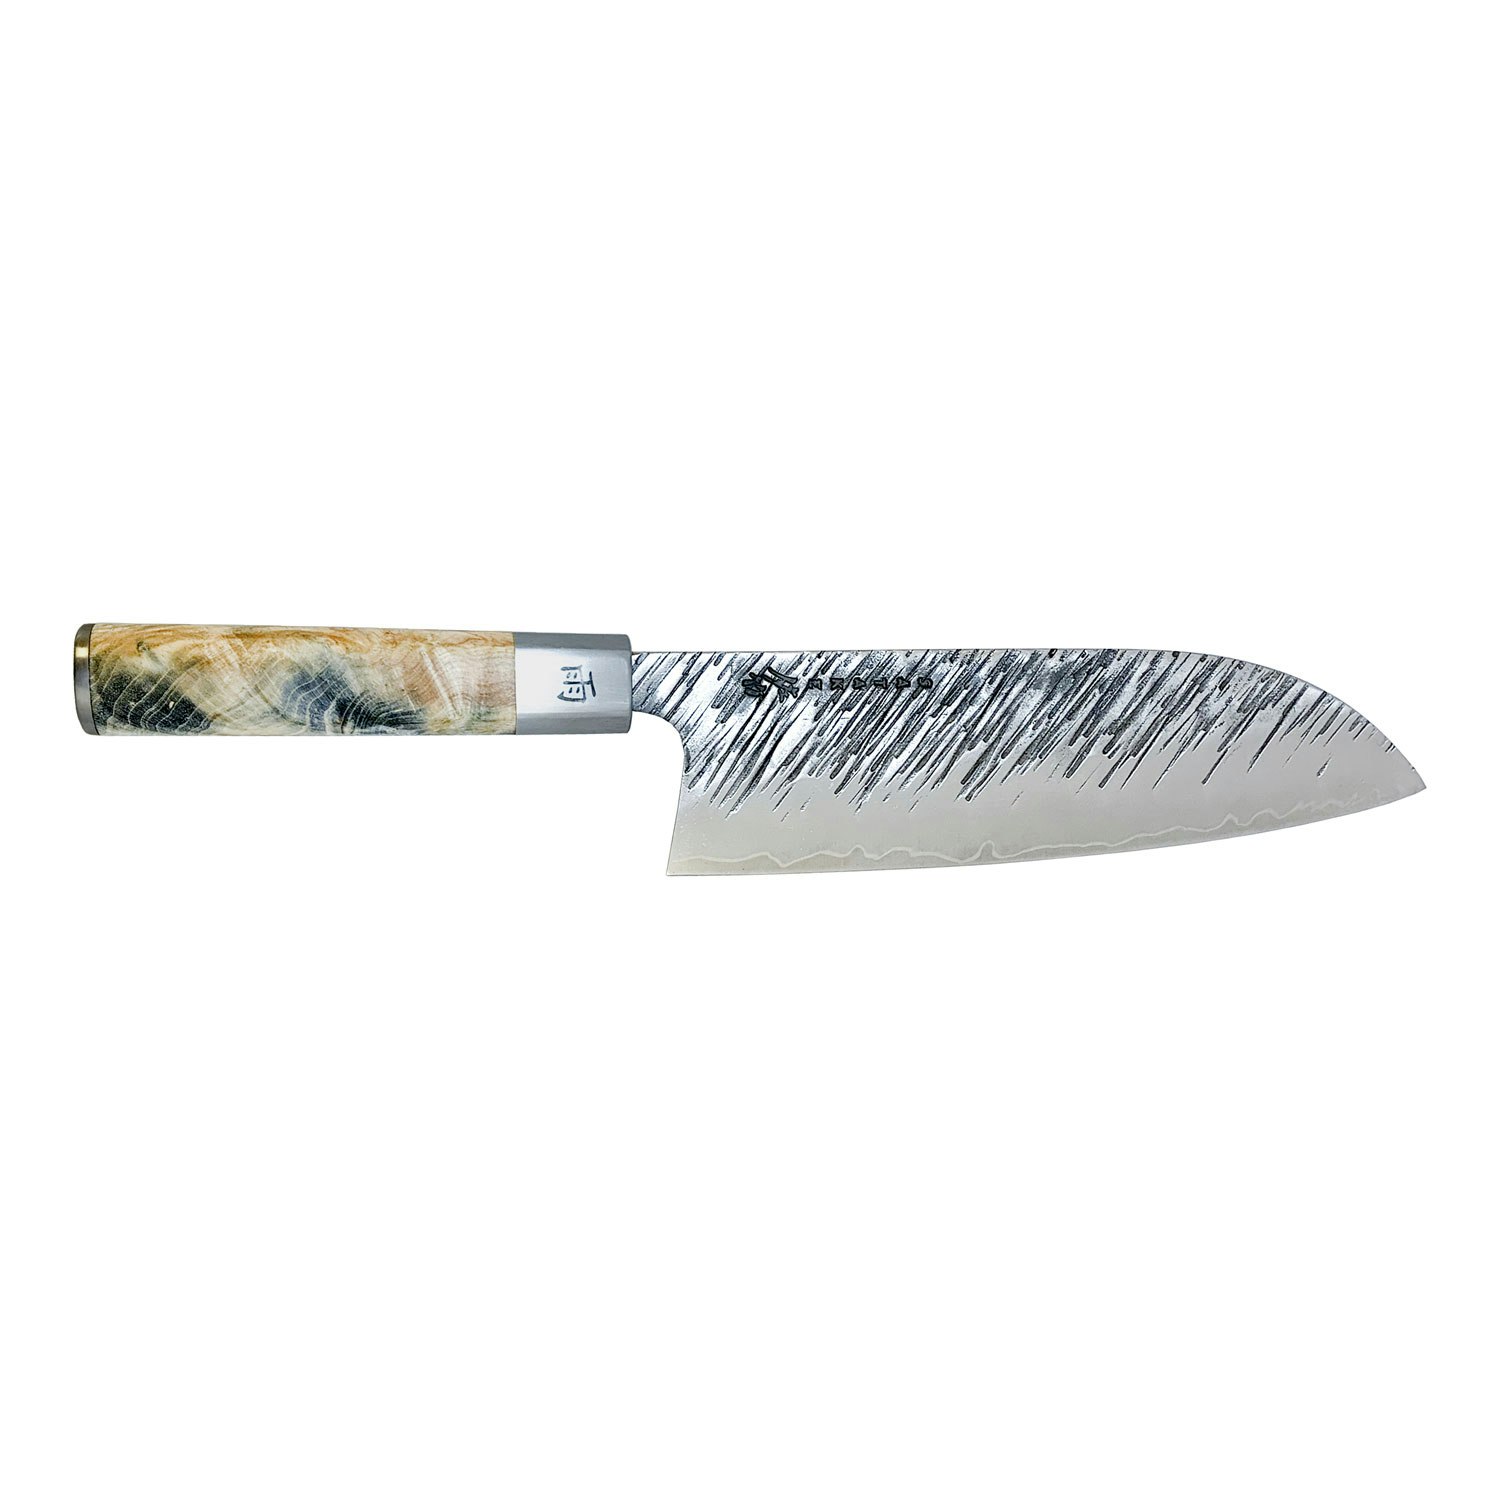 https://royaldesign.com/image/2/satake-ame-santoku-knife-18-cm-0